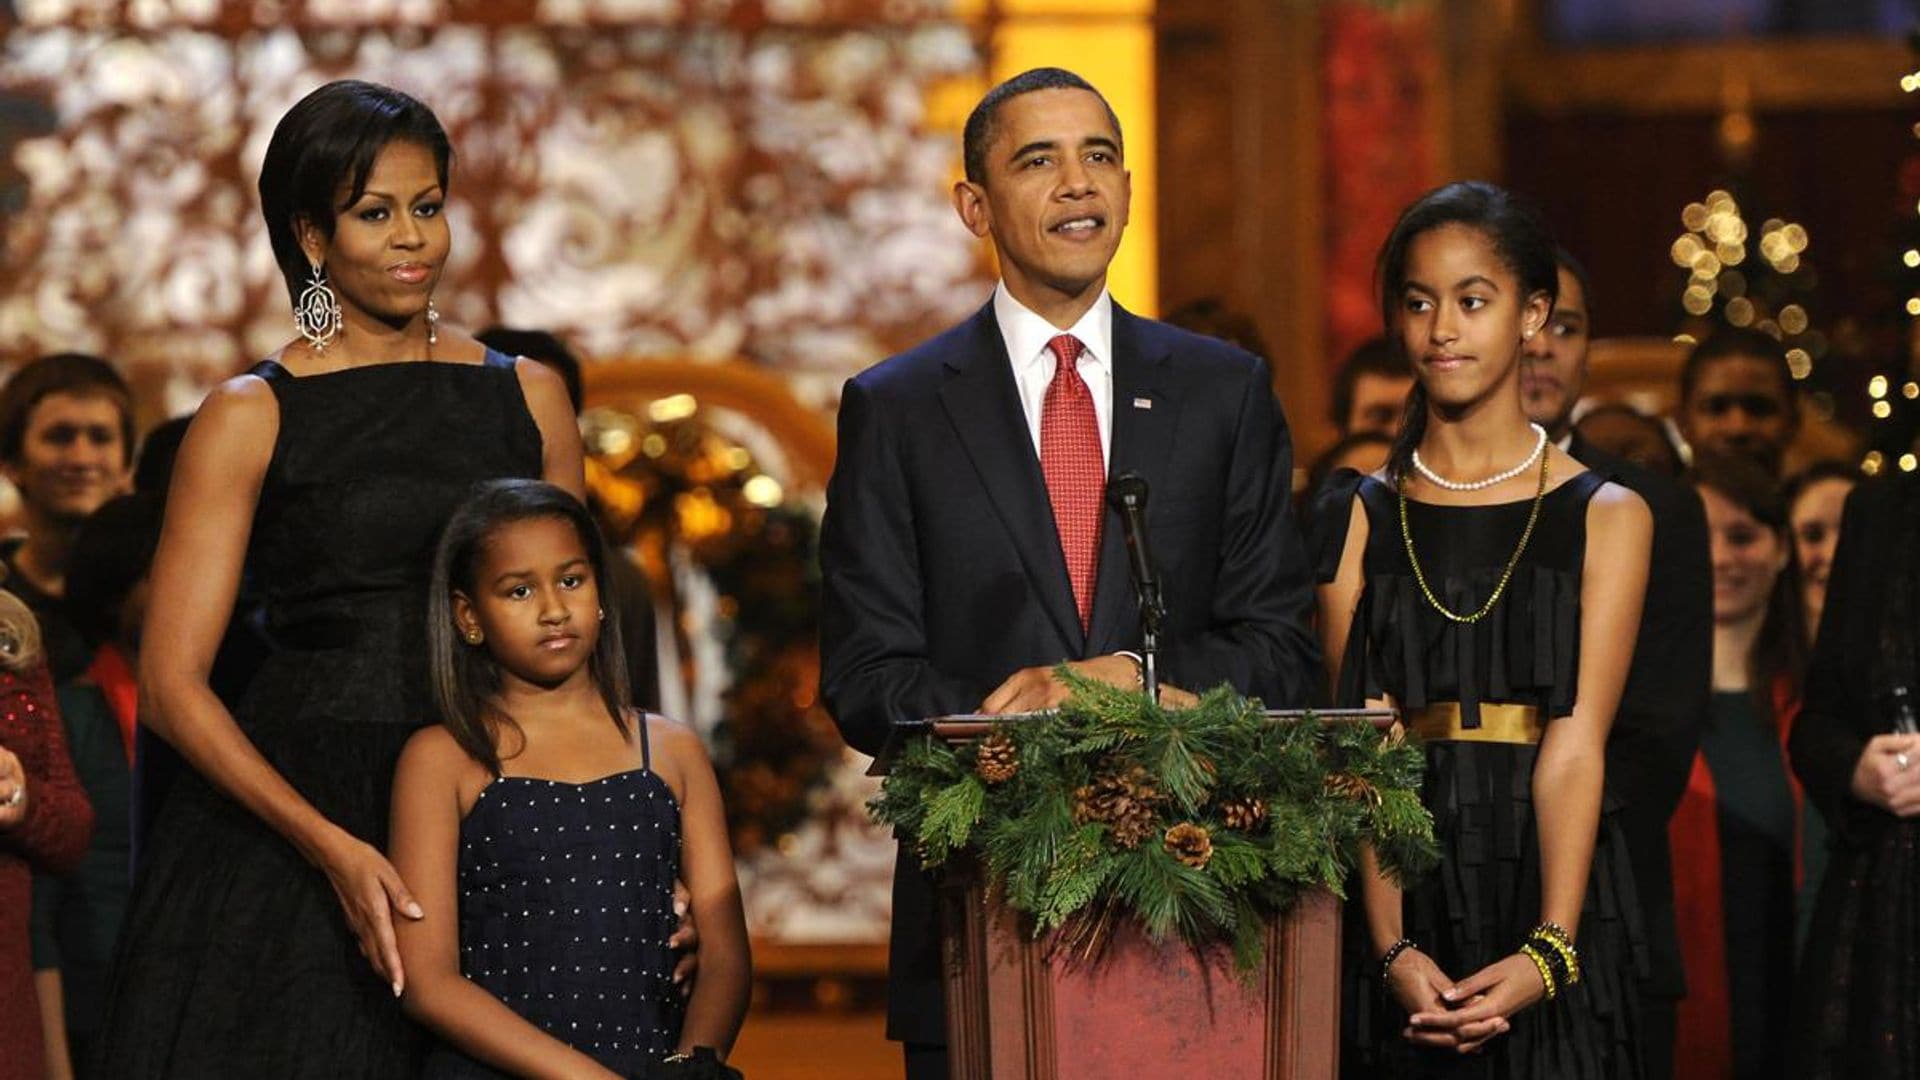 Michelle Obama shares a holiday throwback photo featuring Barack, Malia, and Sasha Obama